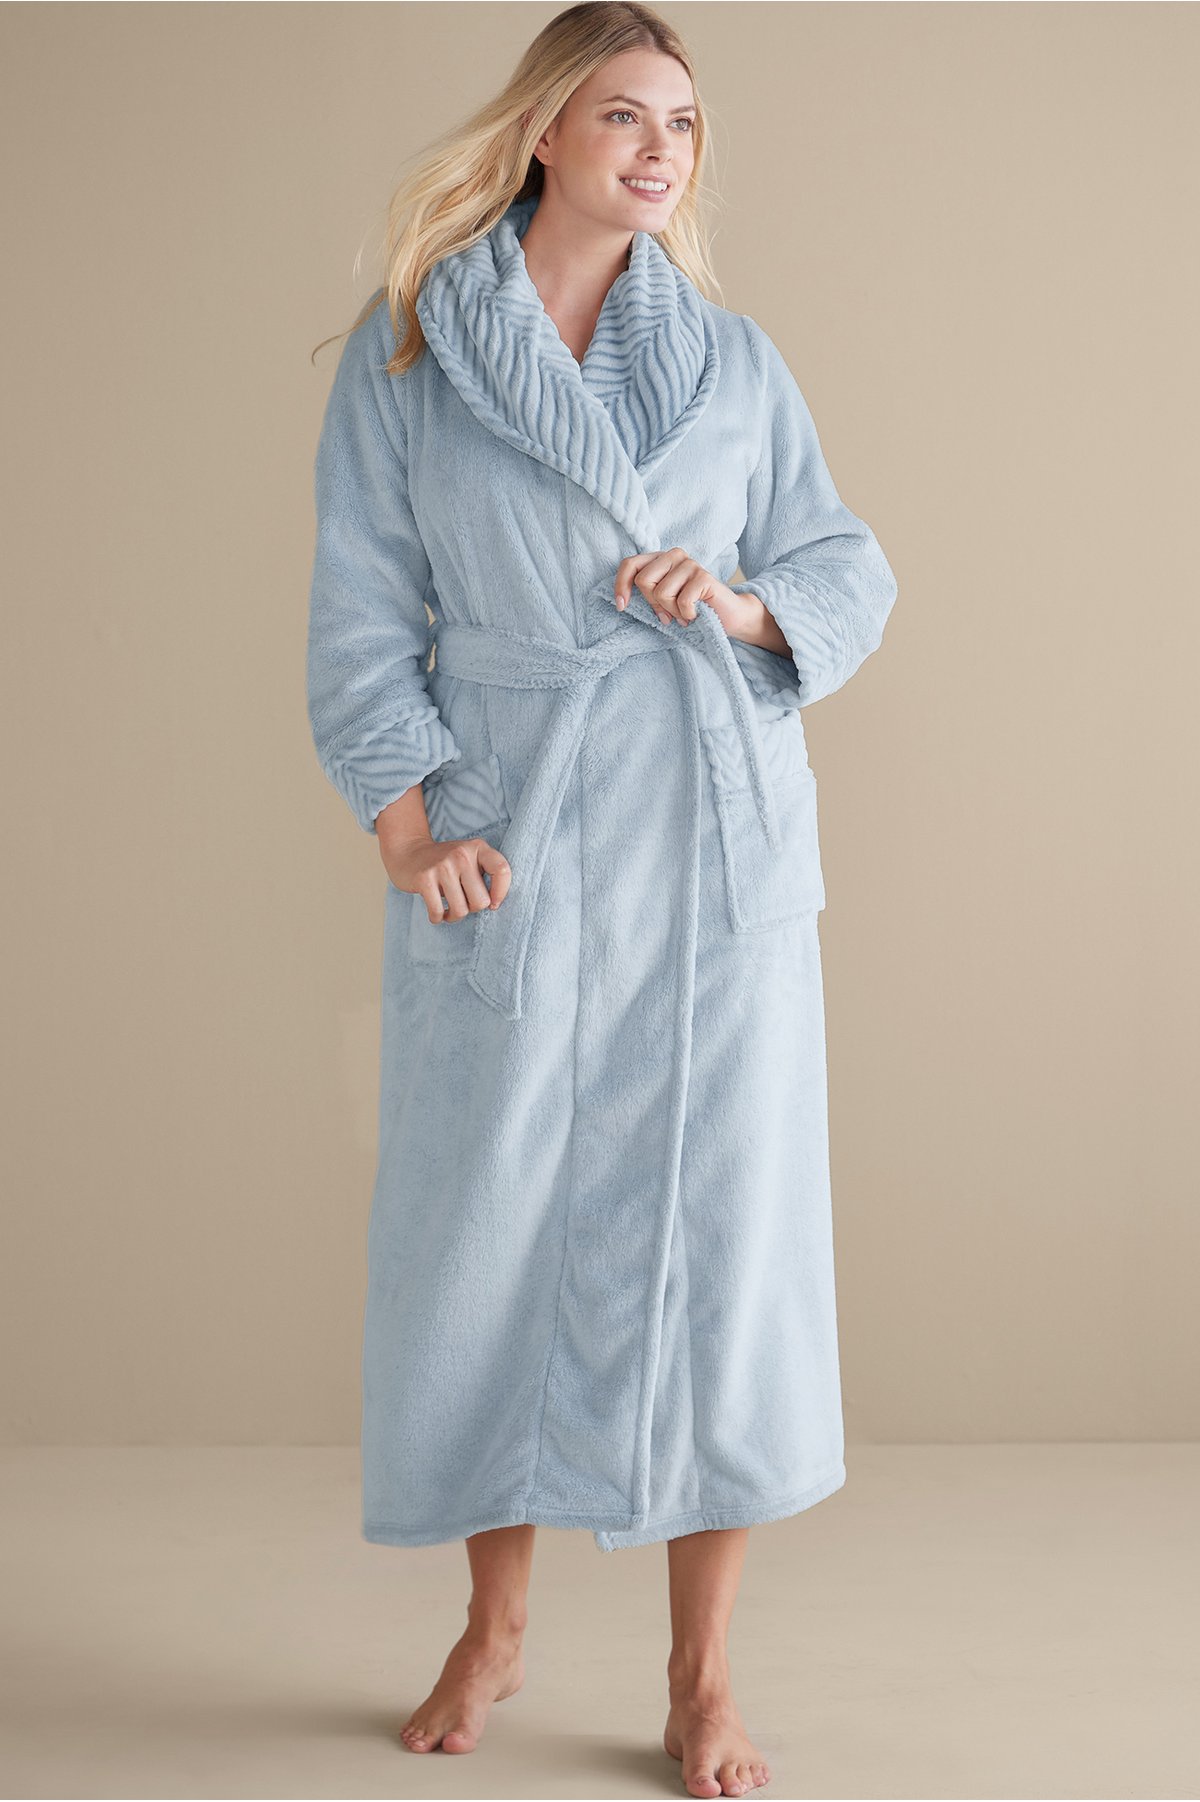 Women's Royal Plush Robe by Soft Surroundings, in Blue Fog size S (6-8)